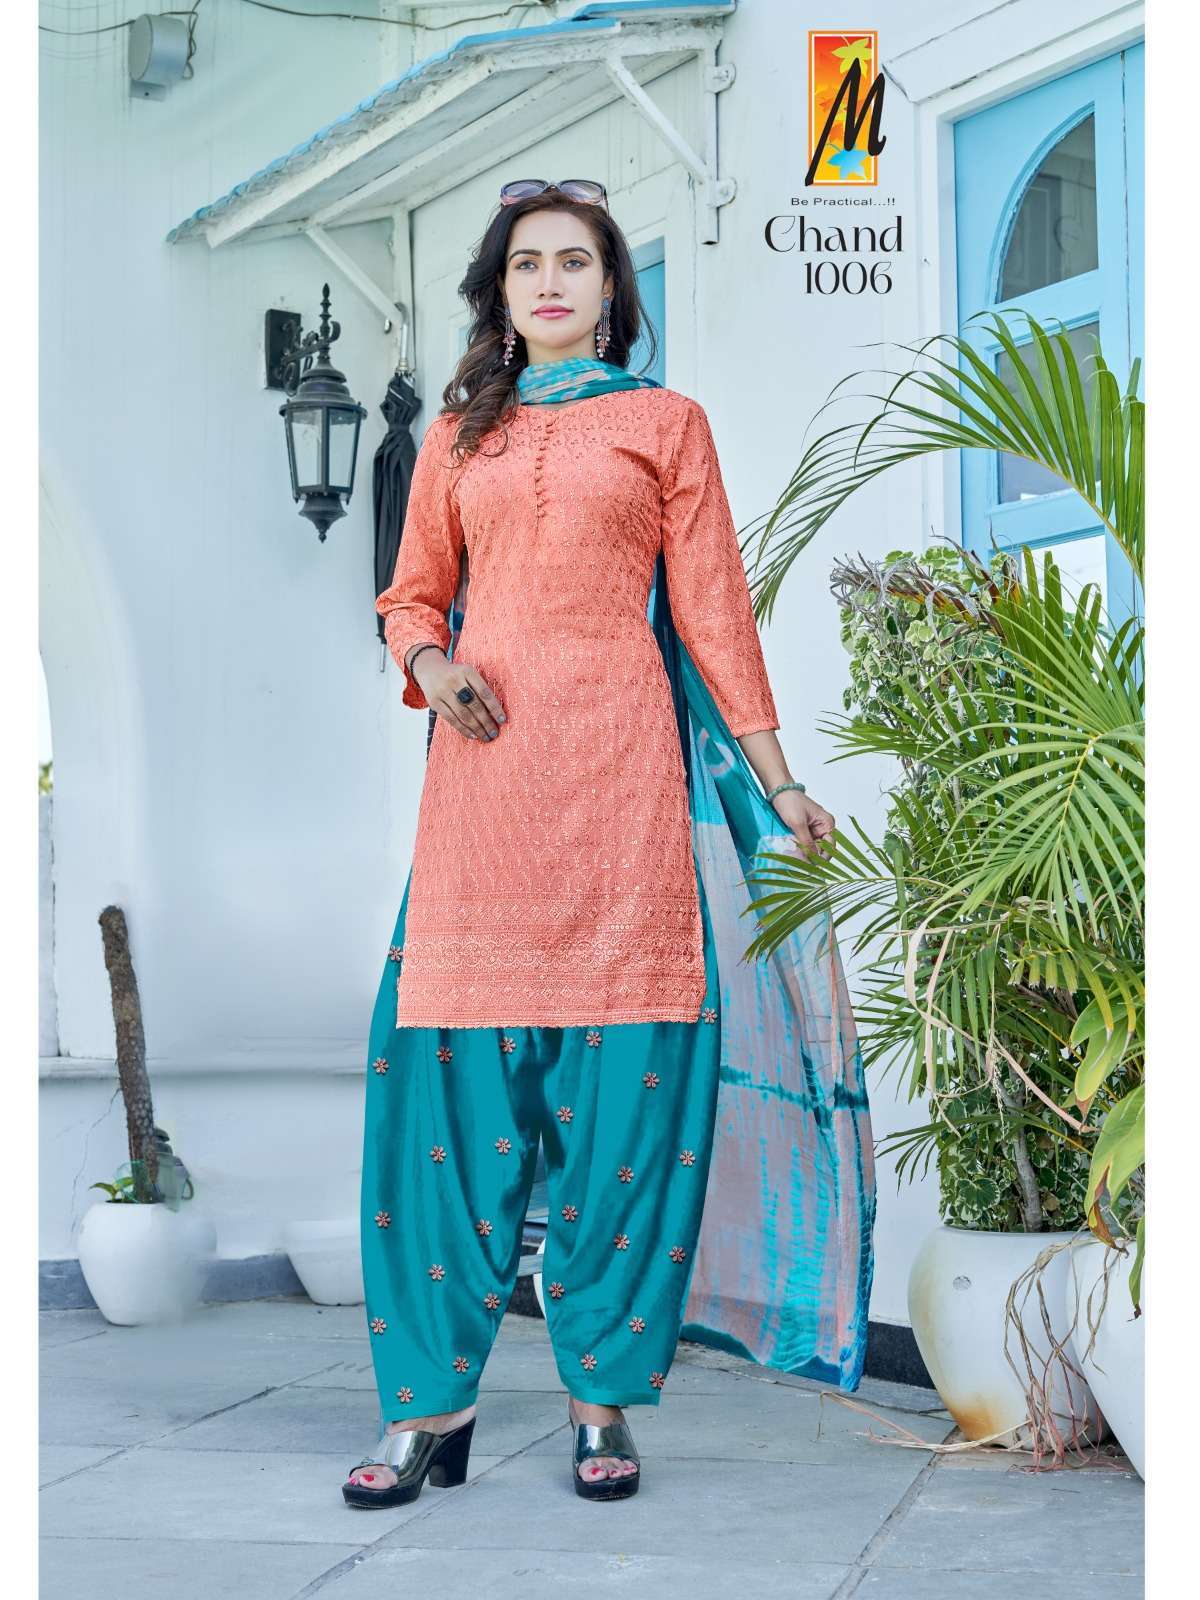 Latest 2020 pink patiyala suit design ideas | Pink patiyala dress design  ideas | Patiala dress - YouTube